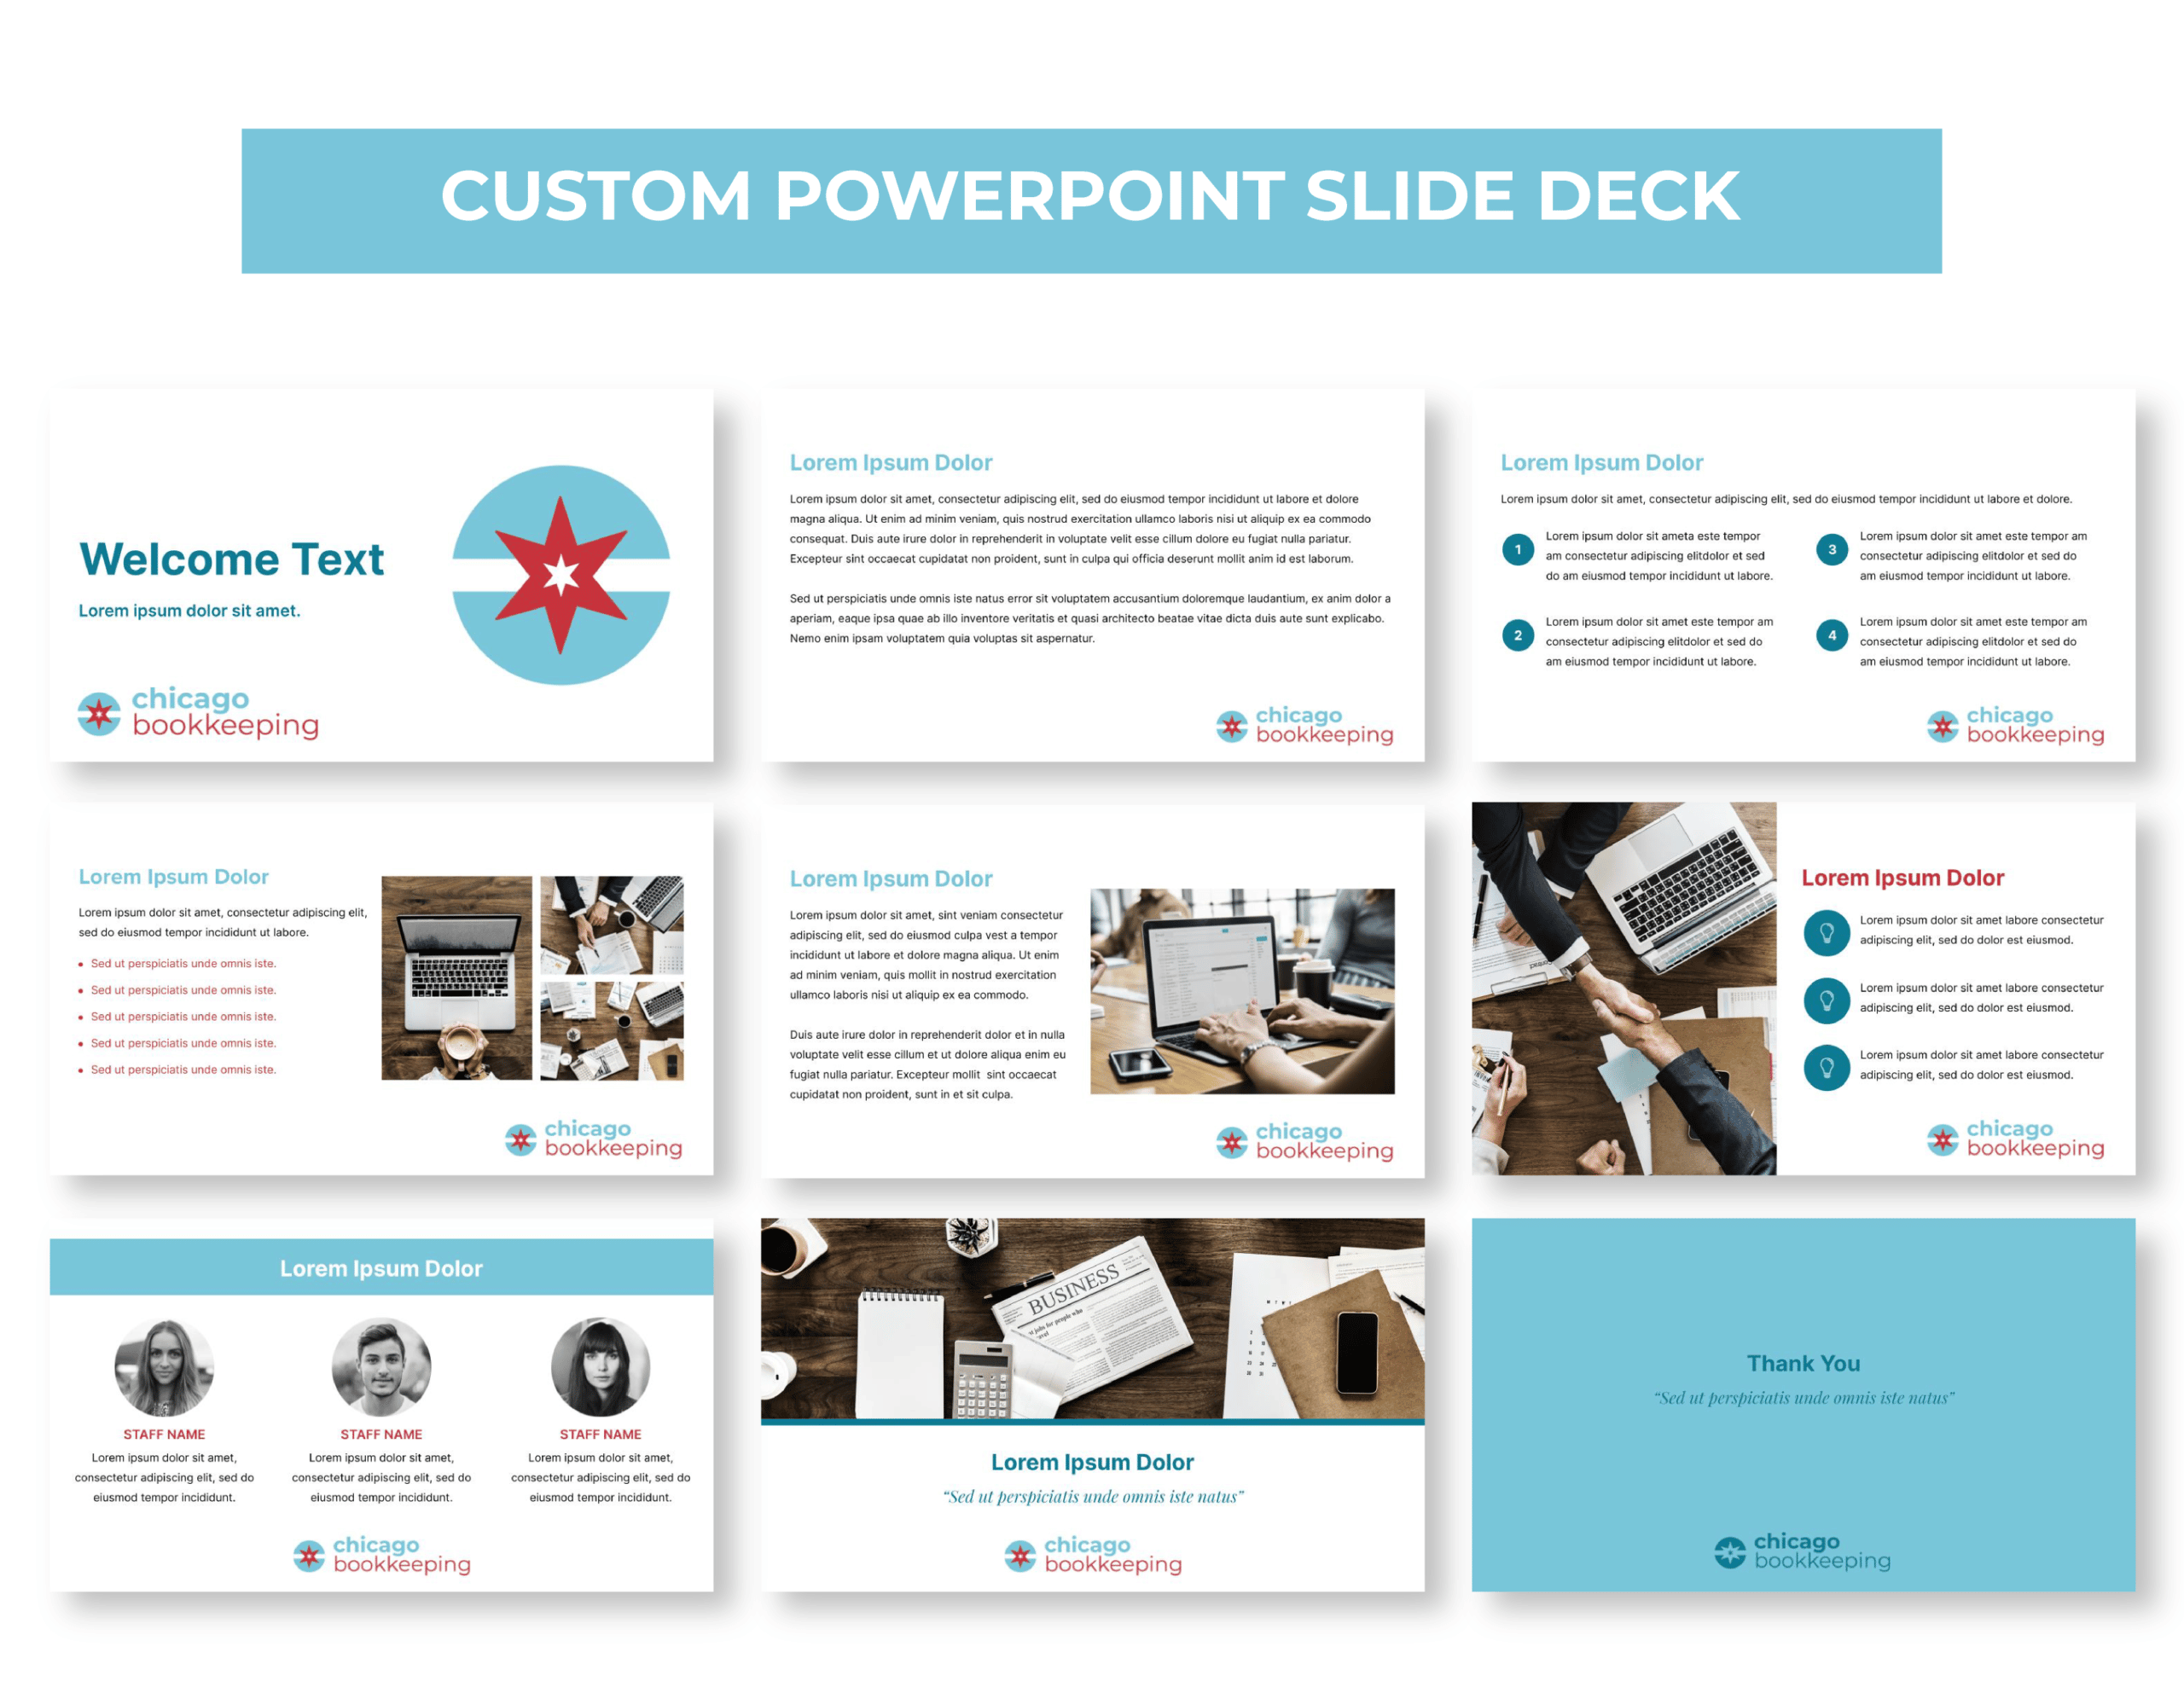 05Chicago_Bookkeeping__Custom PowerPoint Slide Deck